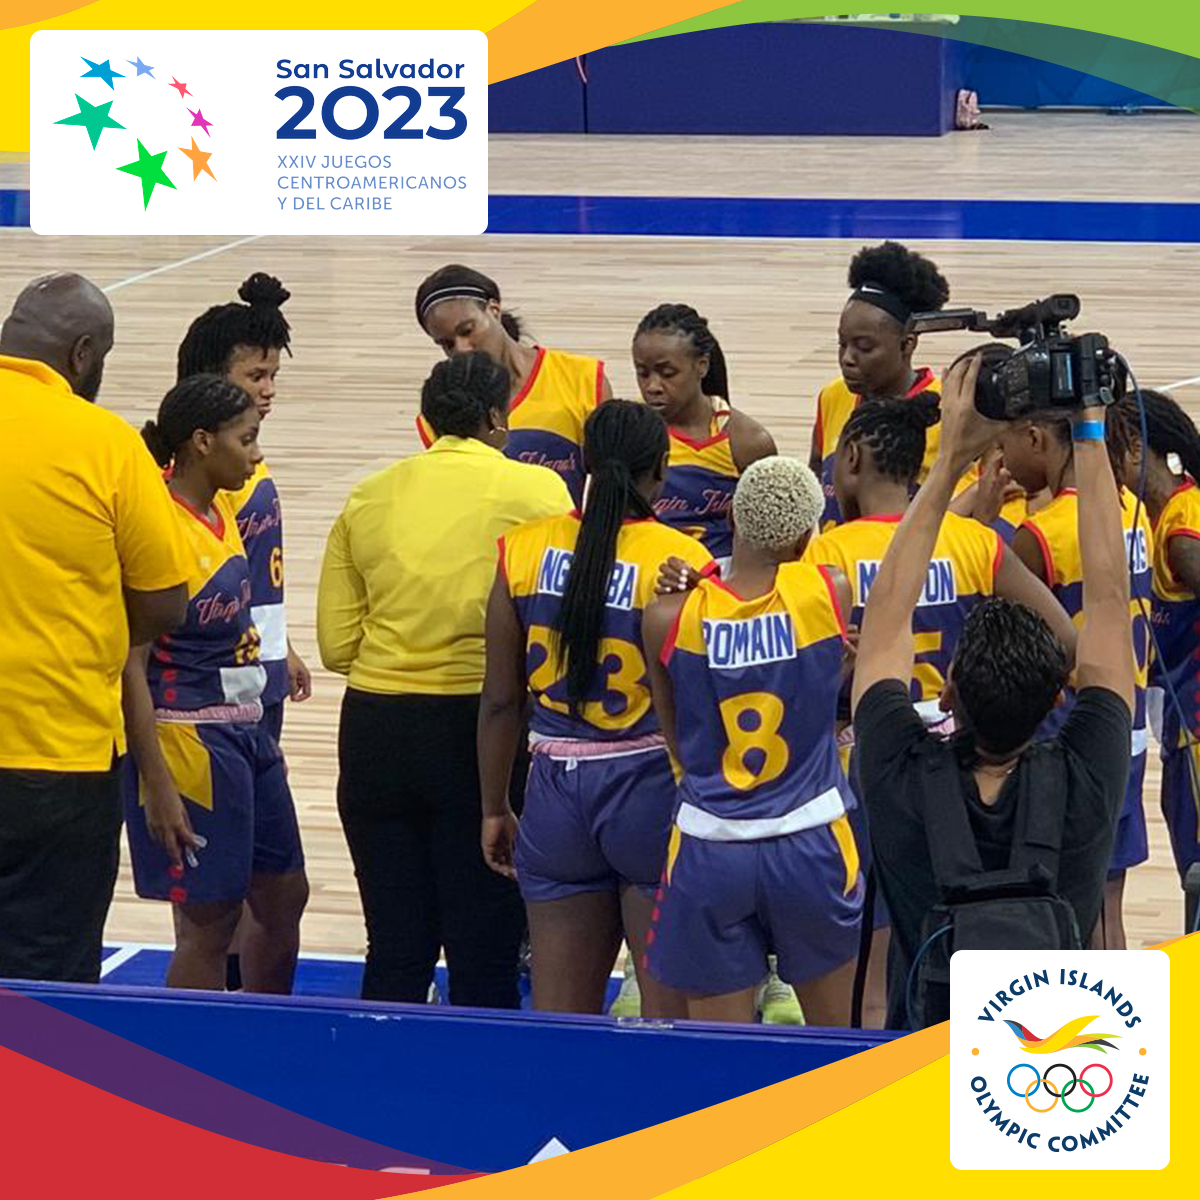 The Virgin Islands (ISV) Women’s National Basketball team made history at the San Salvador 2023